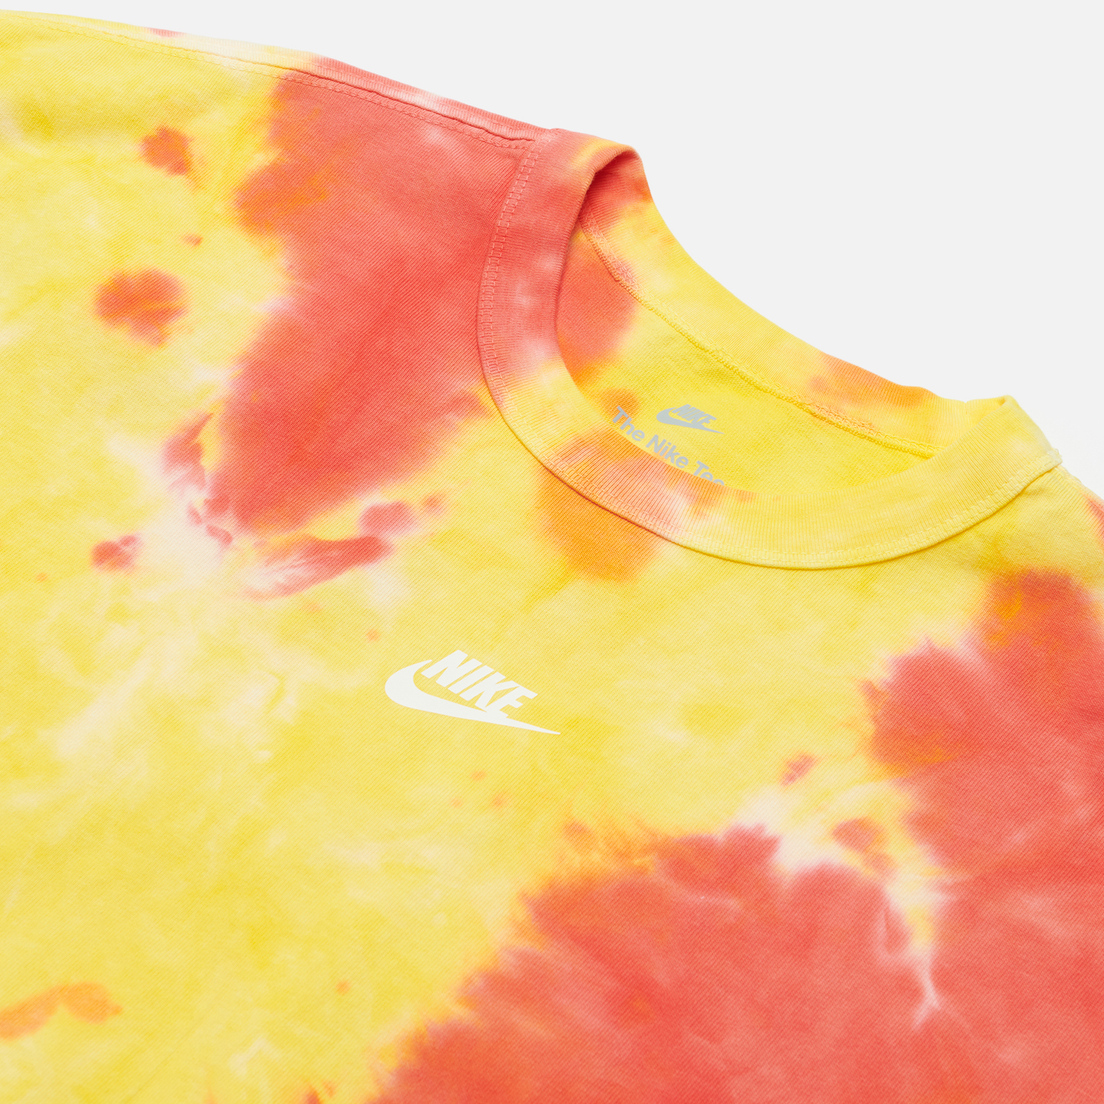 Nike Мужская футболка Premium Essential Tie-Dye